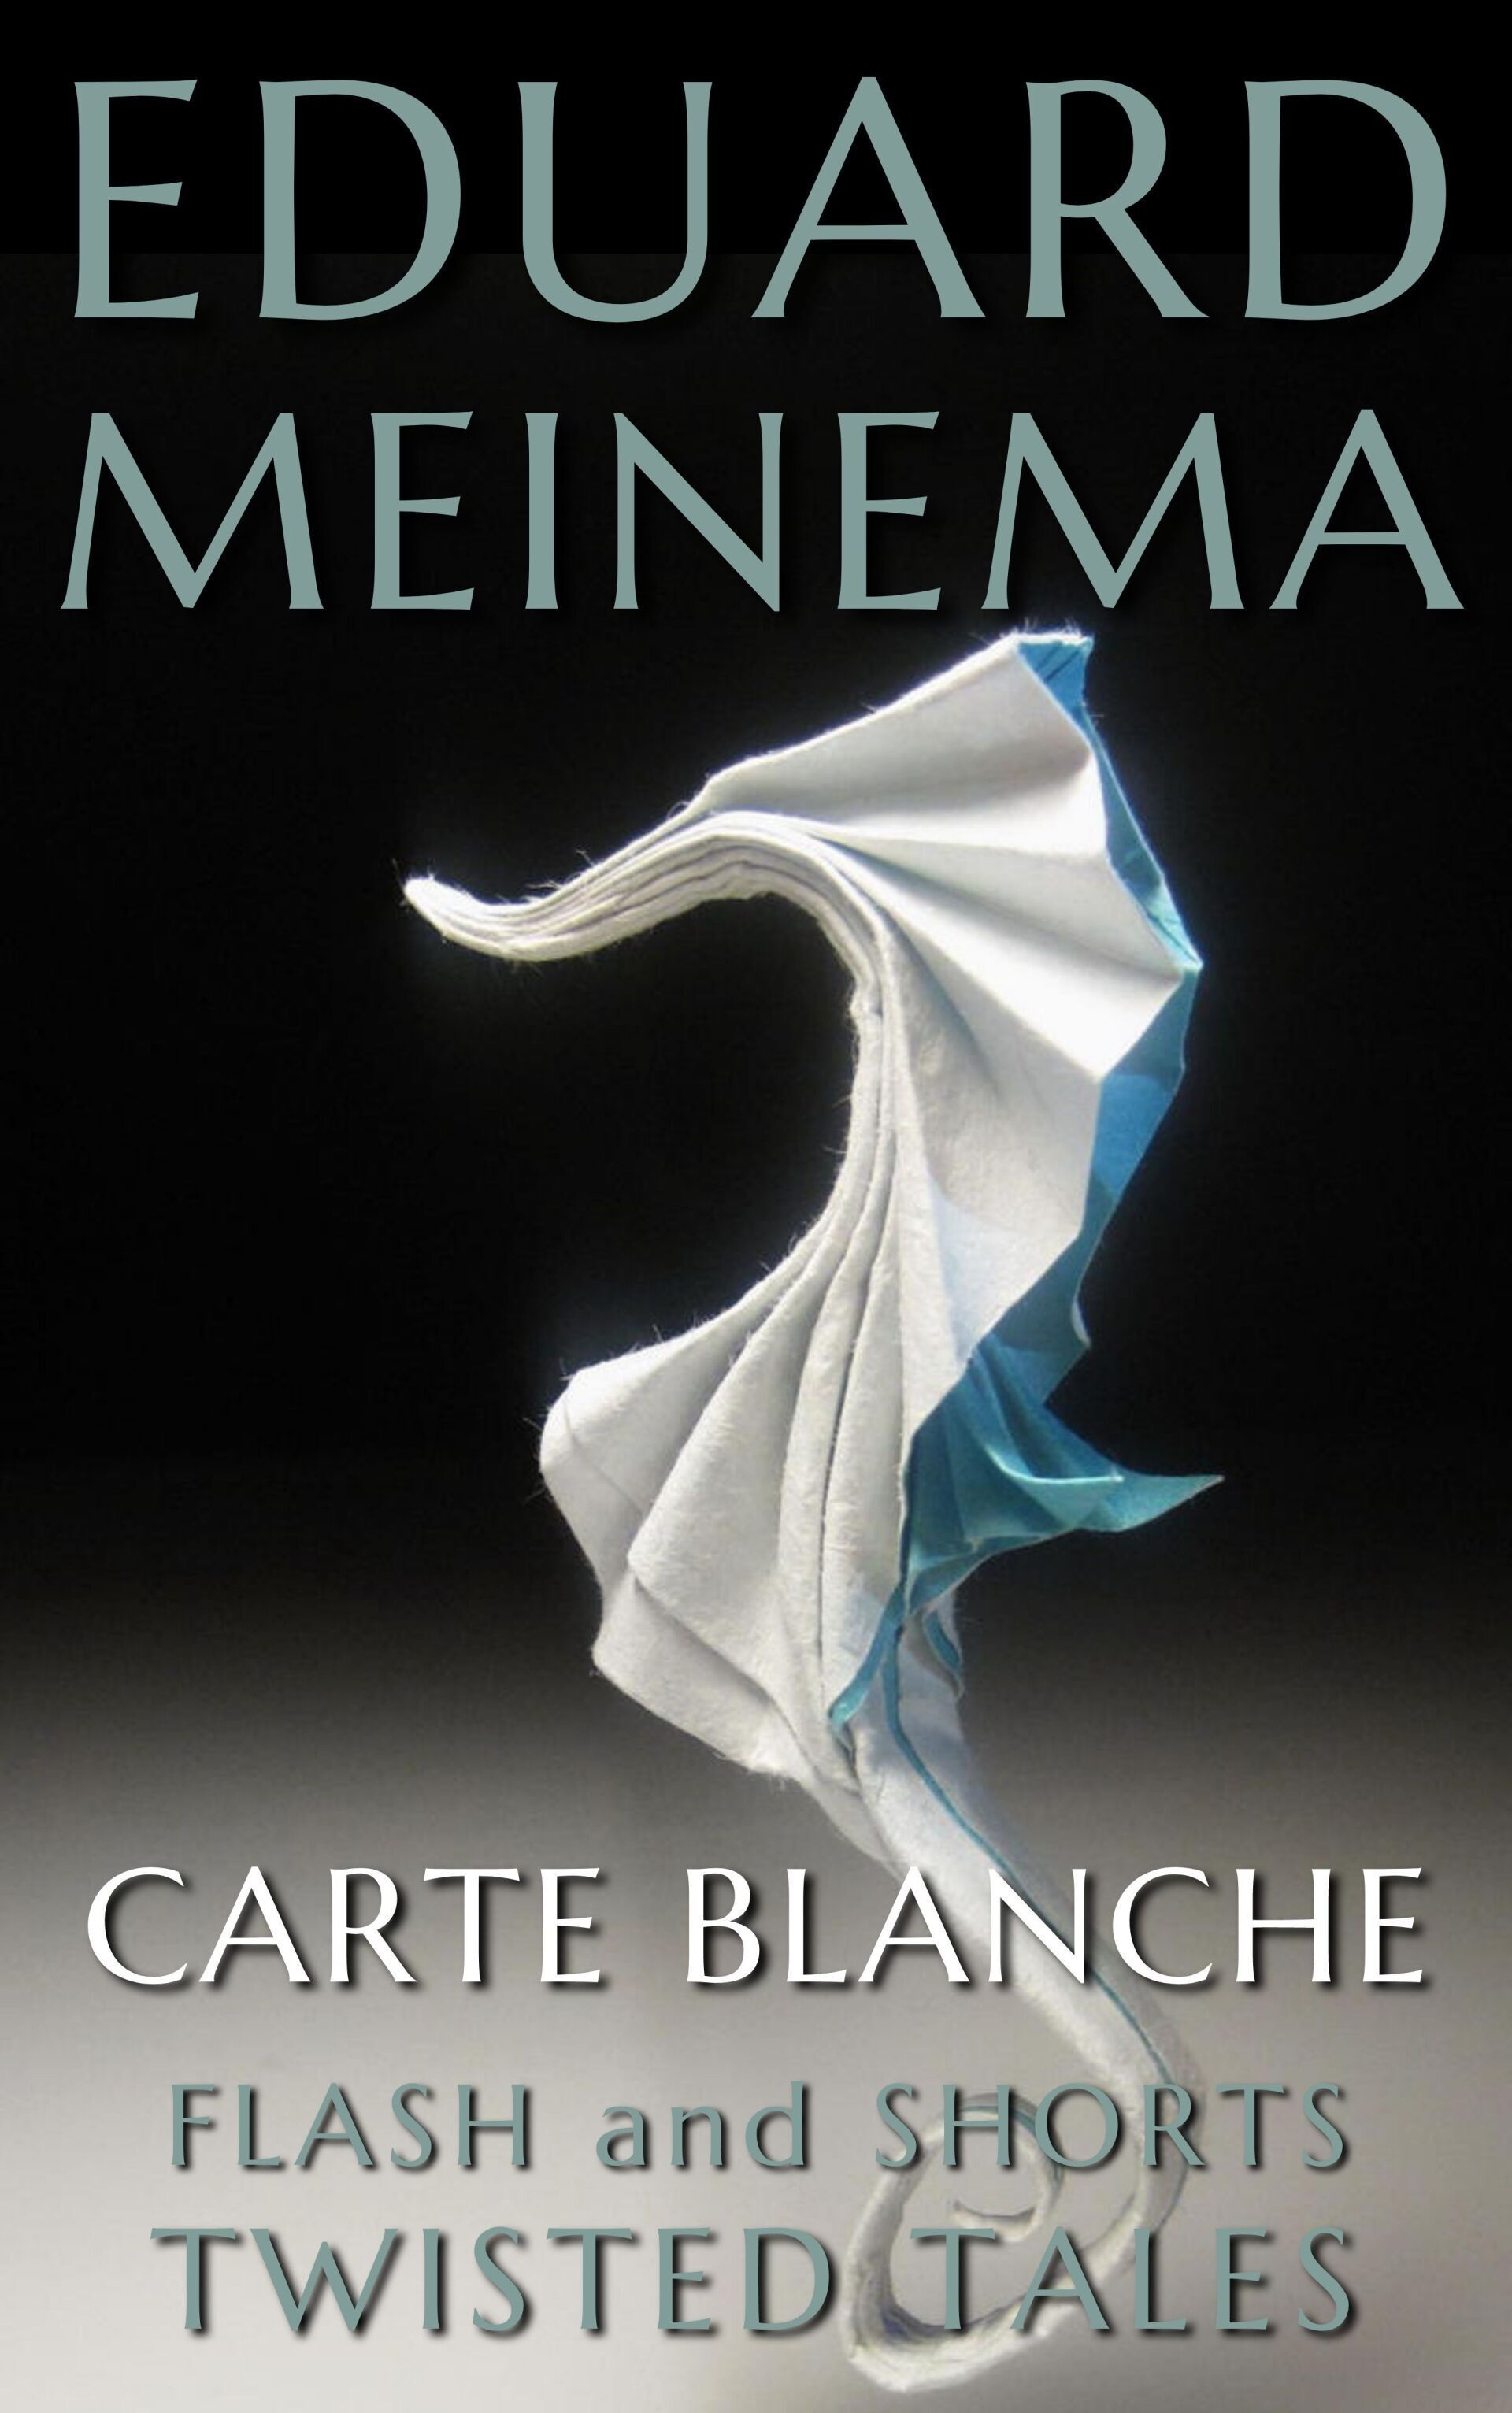 Carte Blanche,  a flash fiction story by Eduard Meinema.